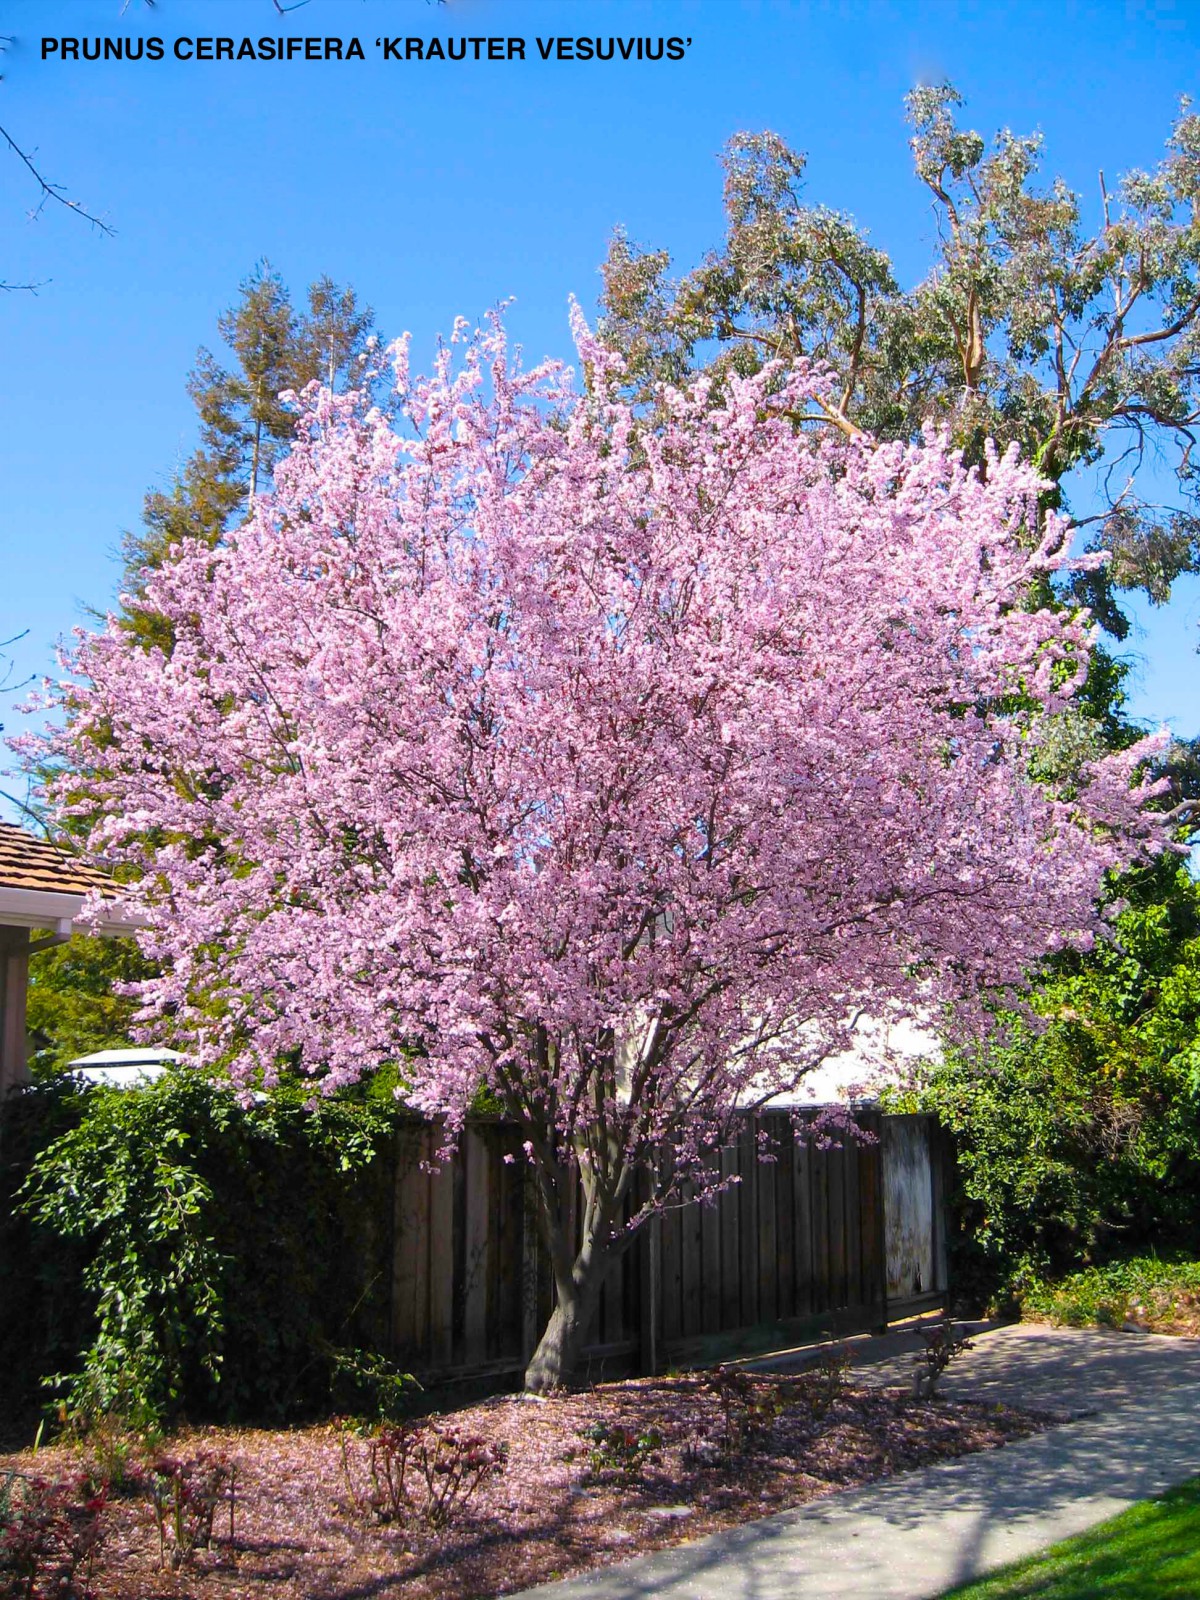 Prunus cerasifera 'Krauter Vesuvius' - blooming Archives - Jeffwortham